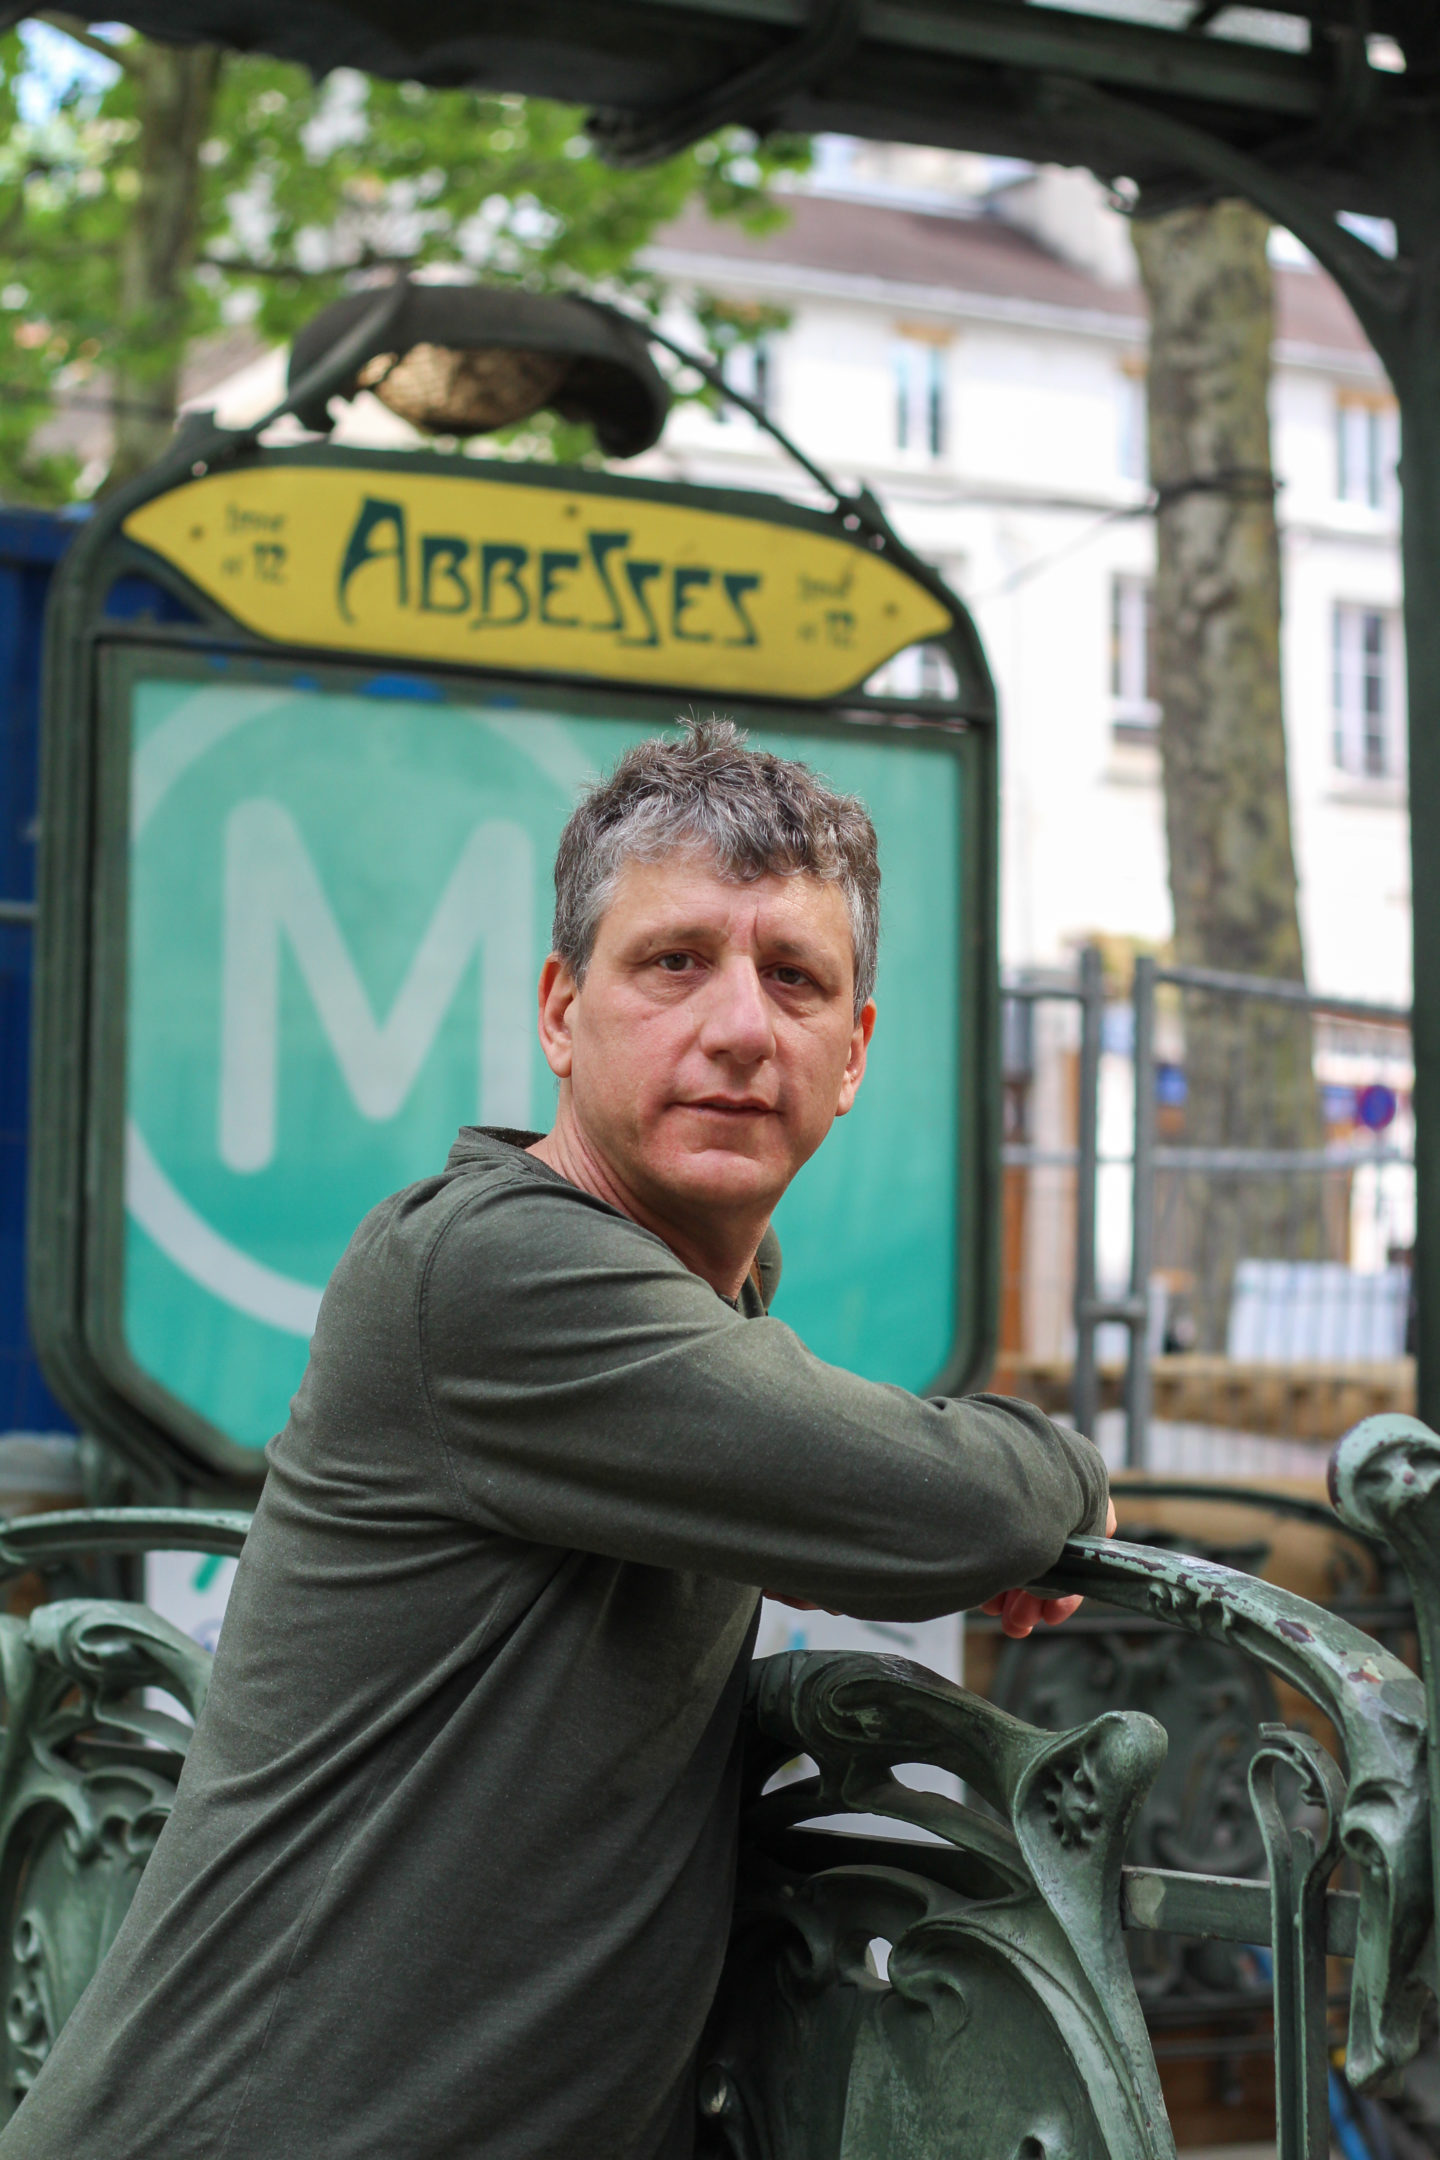 Peter Villani on his journey through Paris